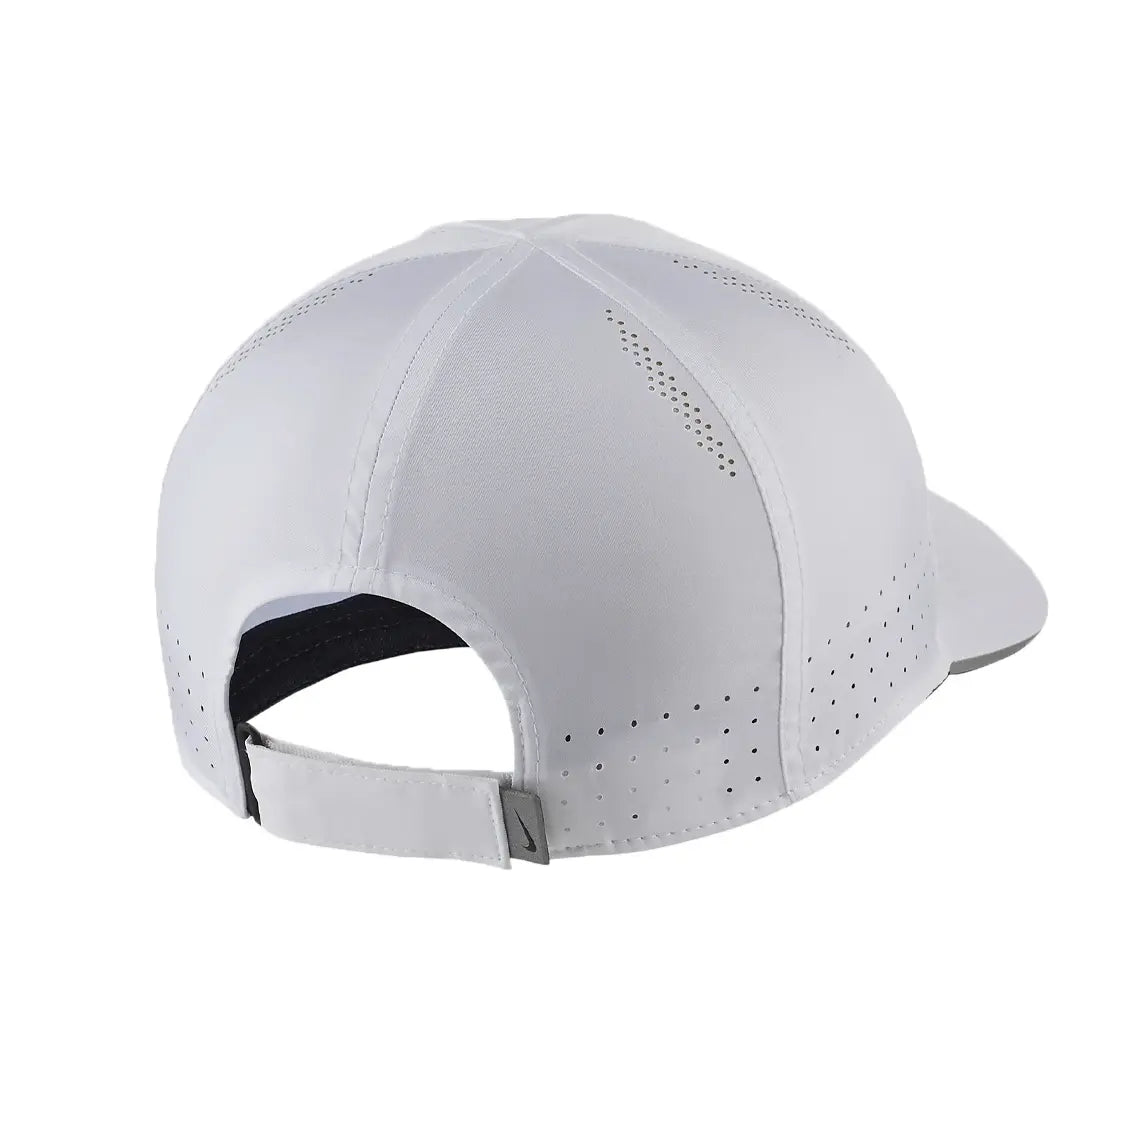 Nike AeroBill Featherlight Perforated Running Cap - White